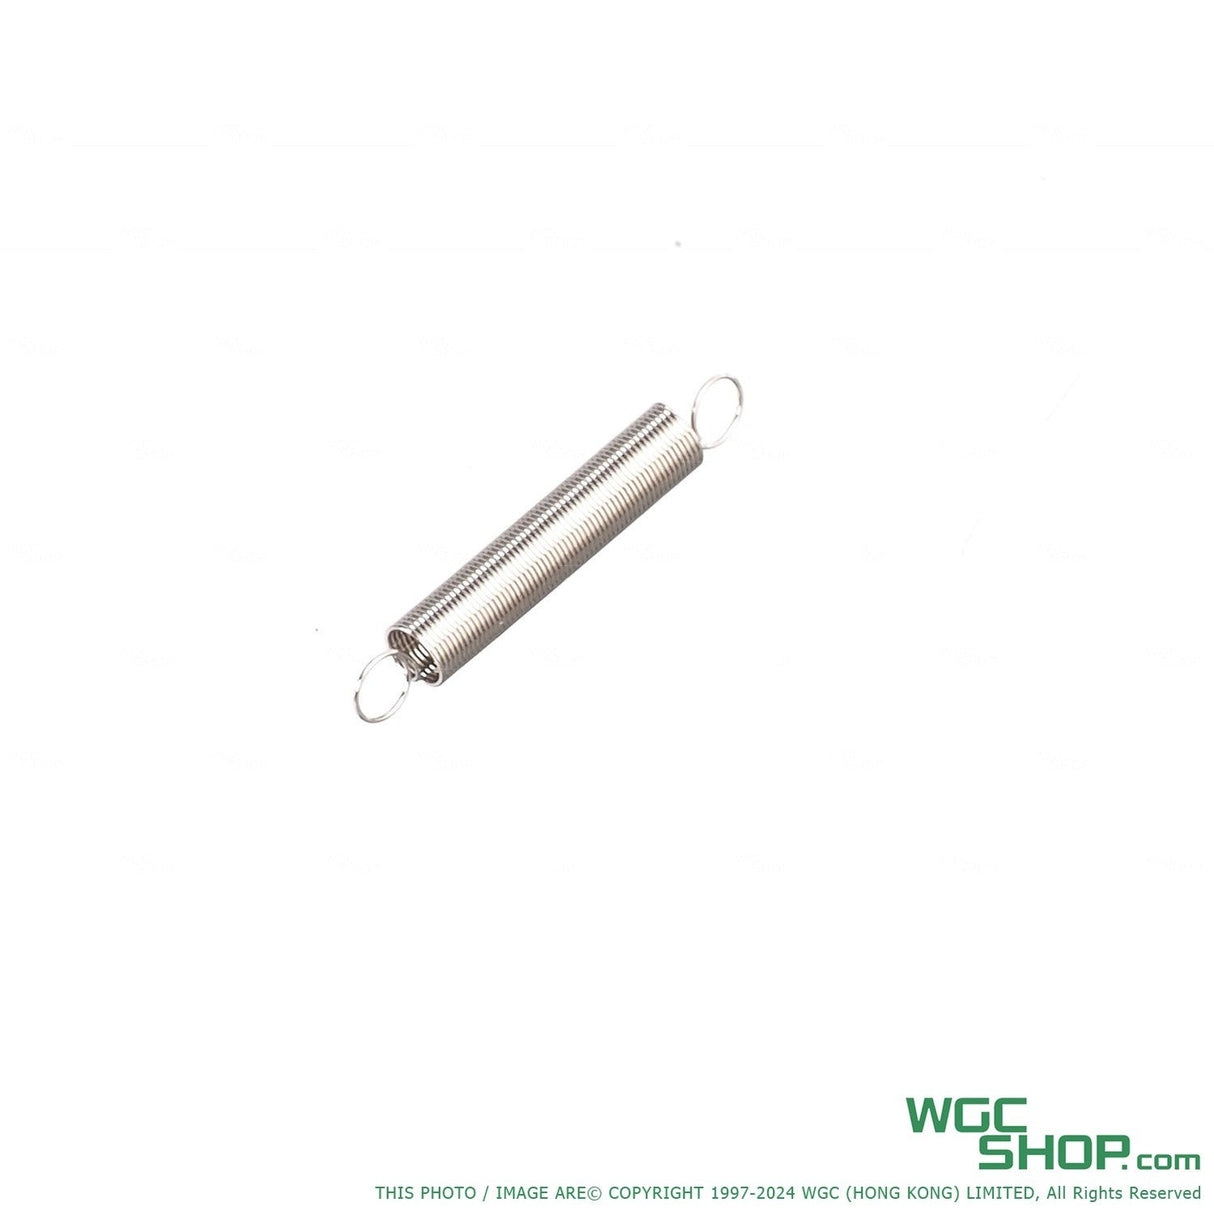 KSC / KWA Original Parts - Nozzle Spring for MP9 / TP9 #87